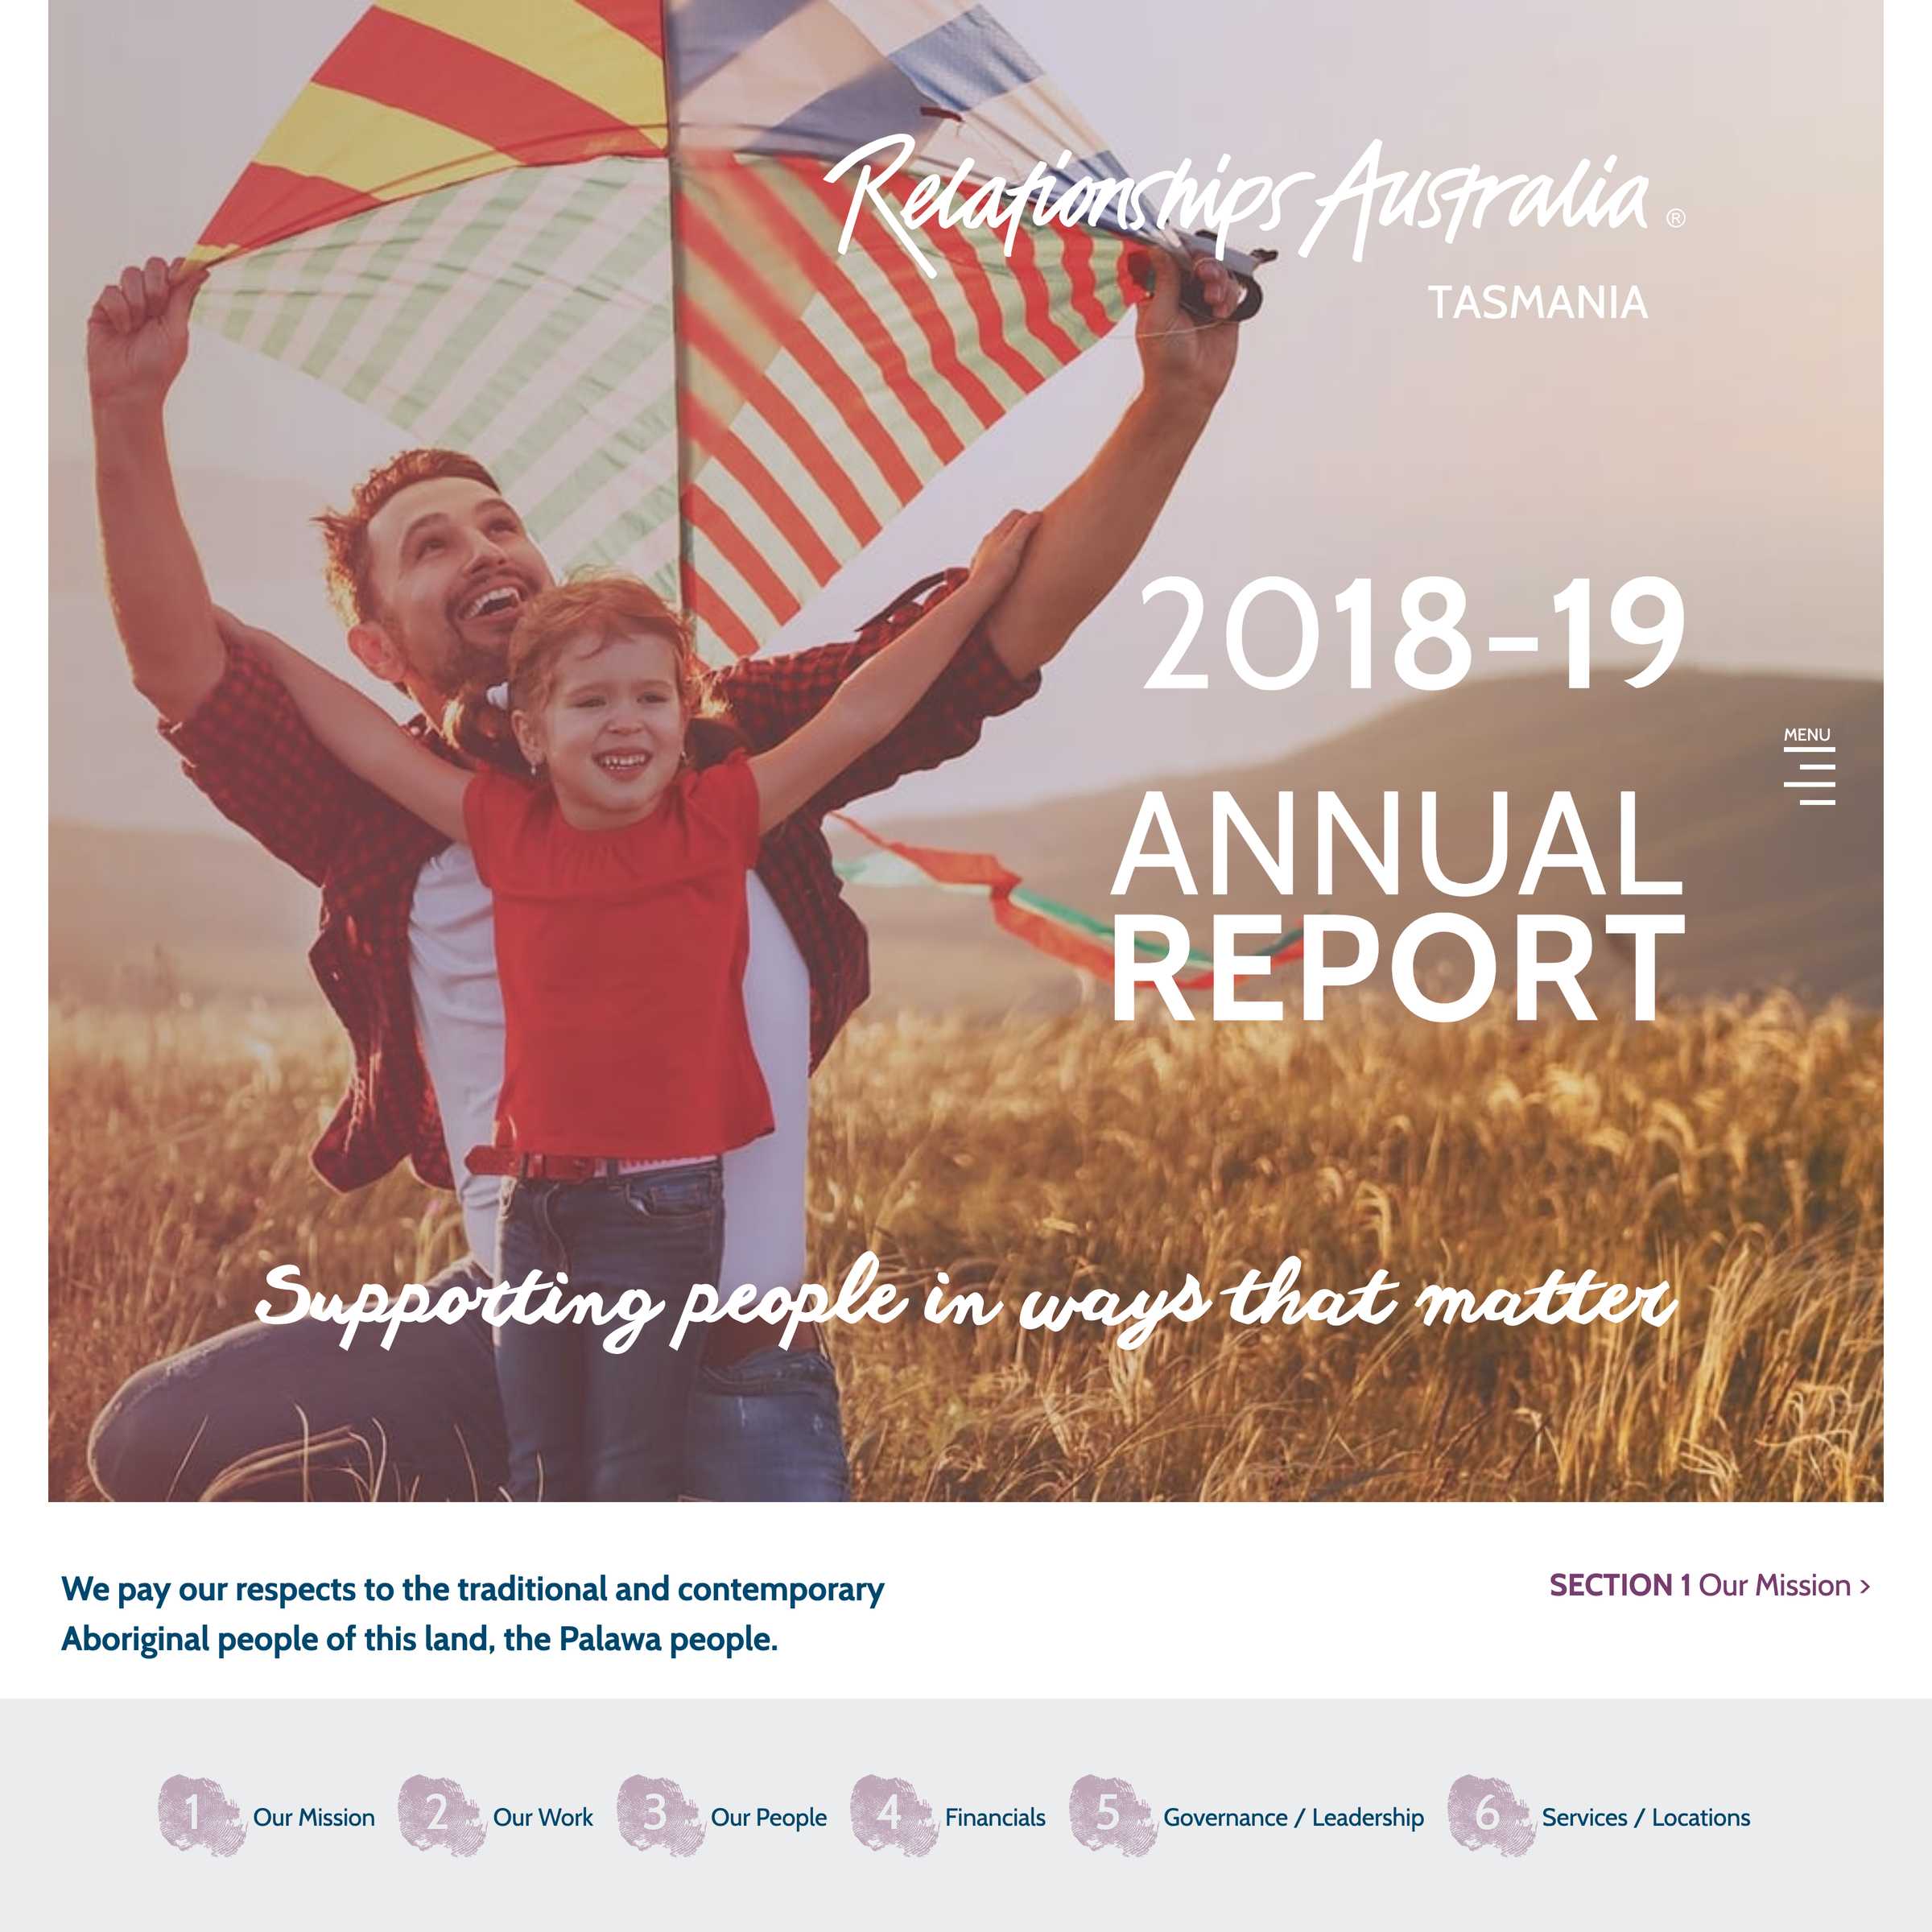 Screenshot of the Relationships Australia Tasmania Annual Report 2018-2019 project